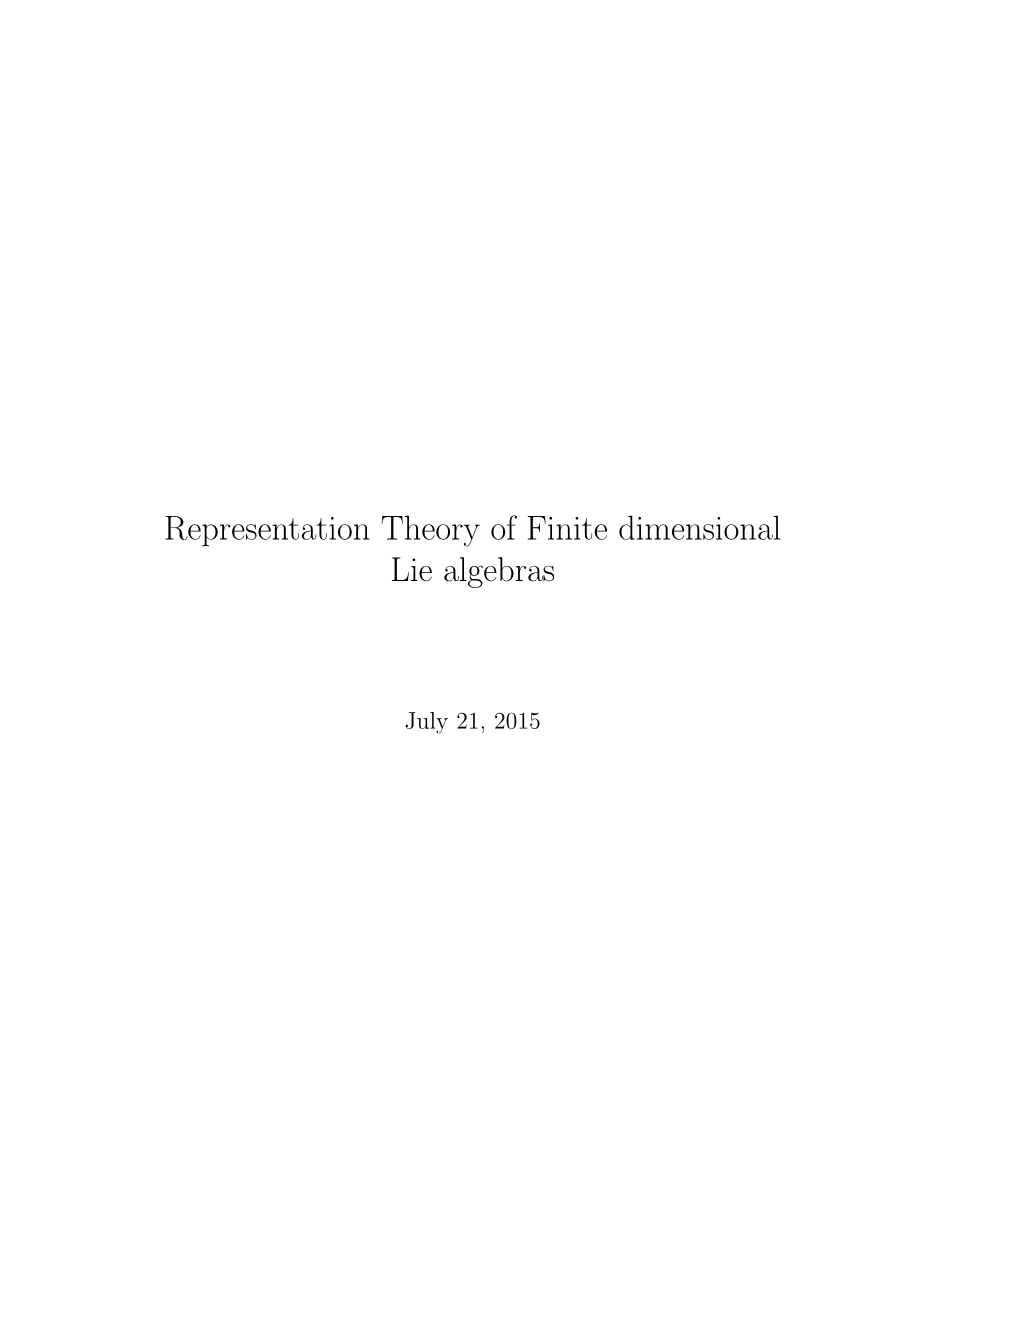 Representation Theory of Finite Dimensional Lie Algebras